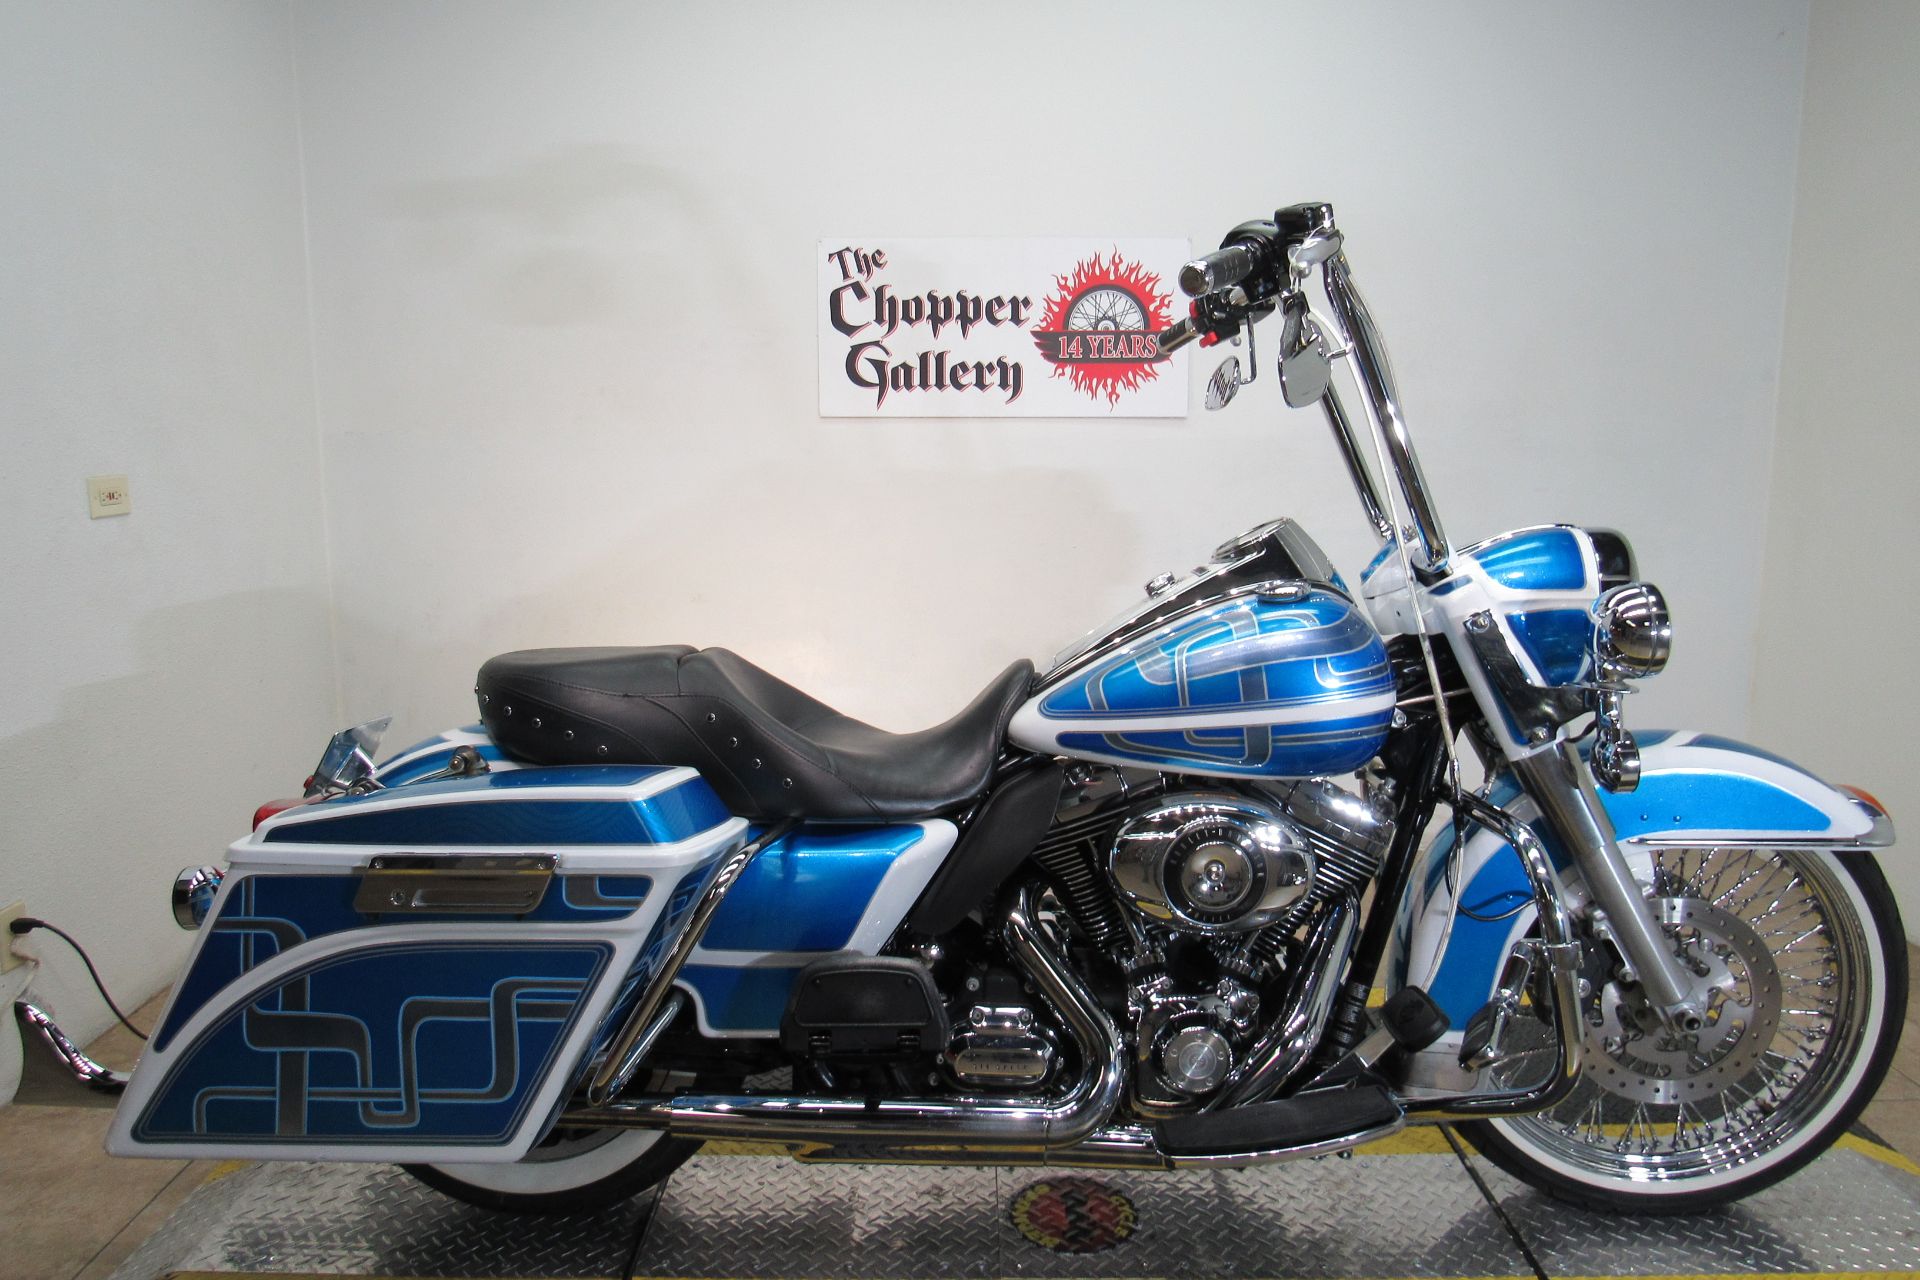 2011 Harley-Davidson Police Road King® in Temecula, California - Photo 1